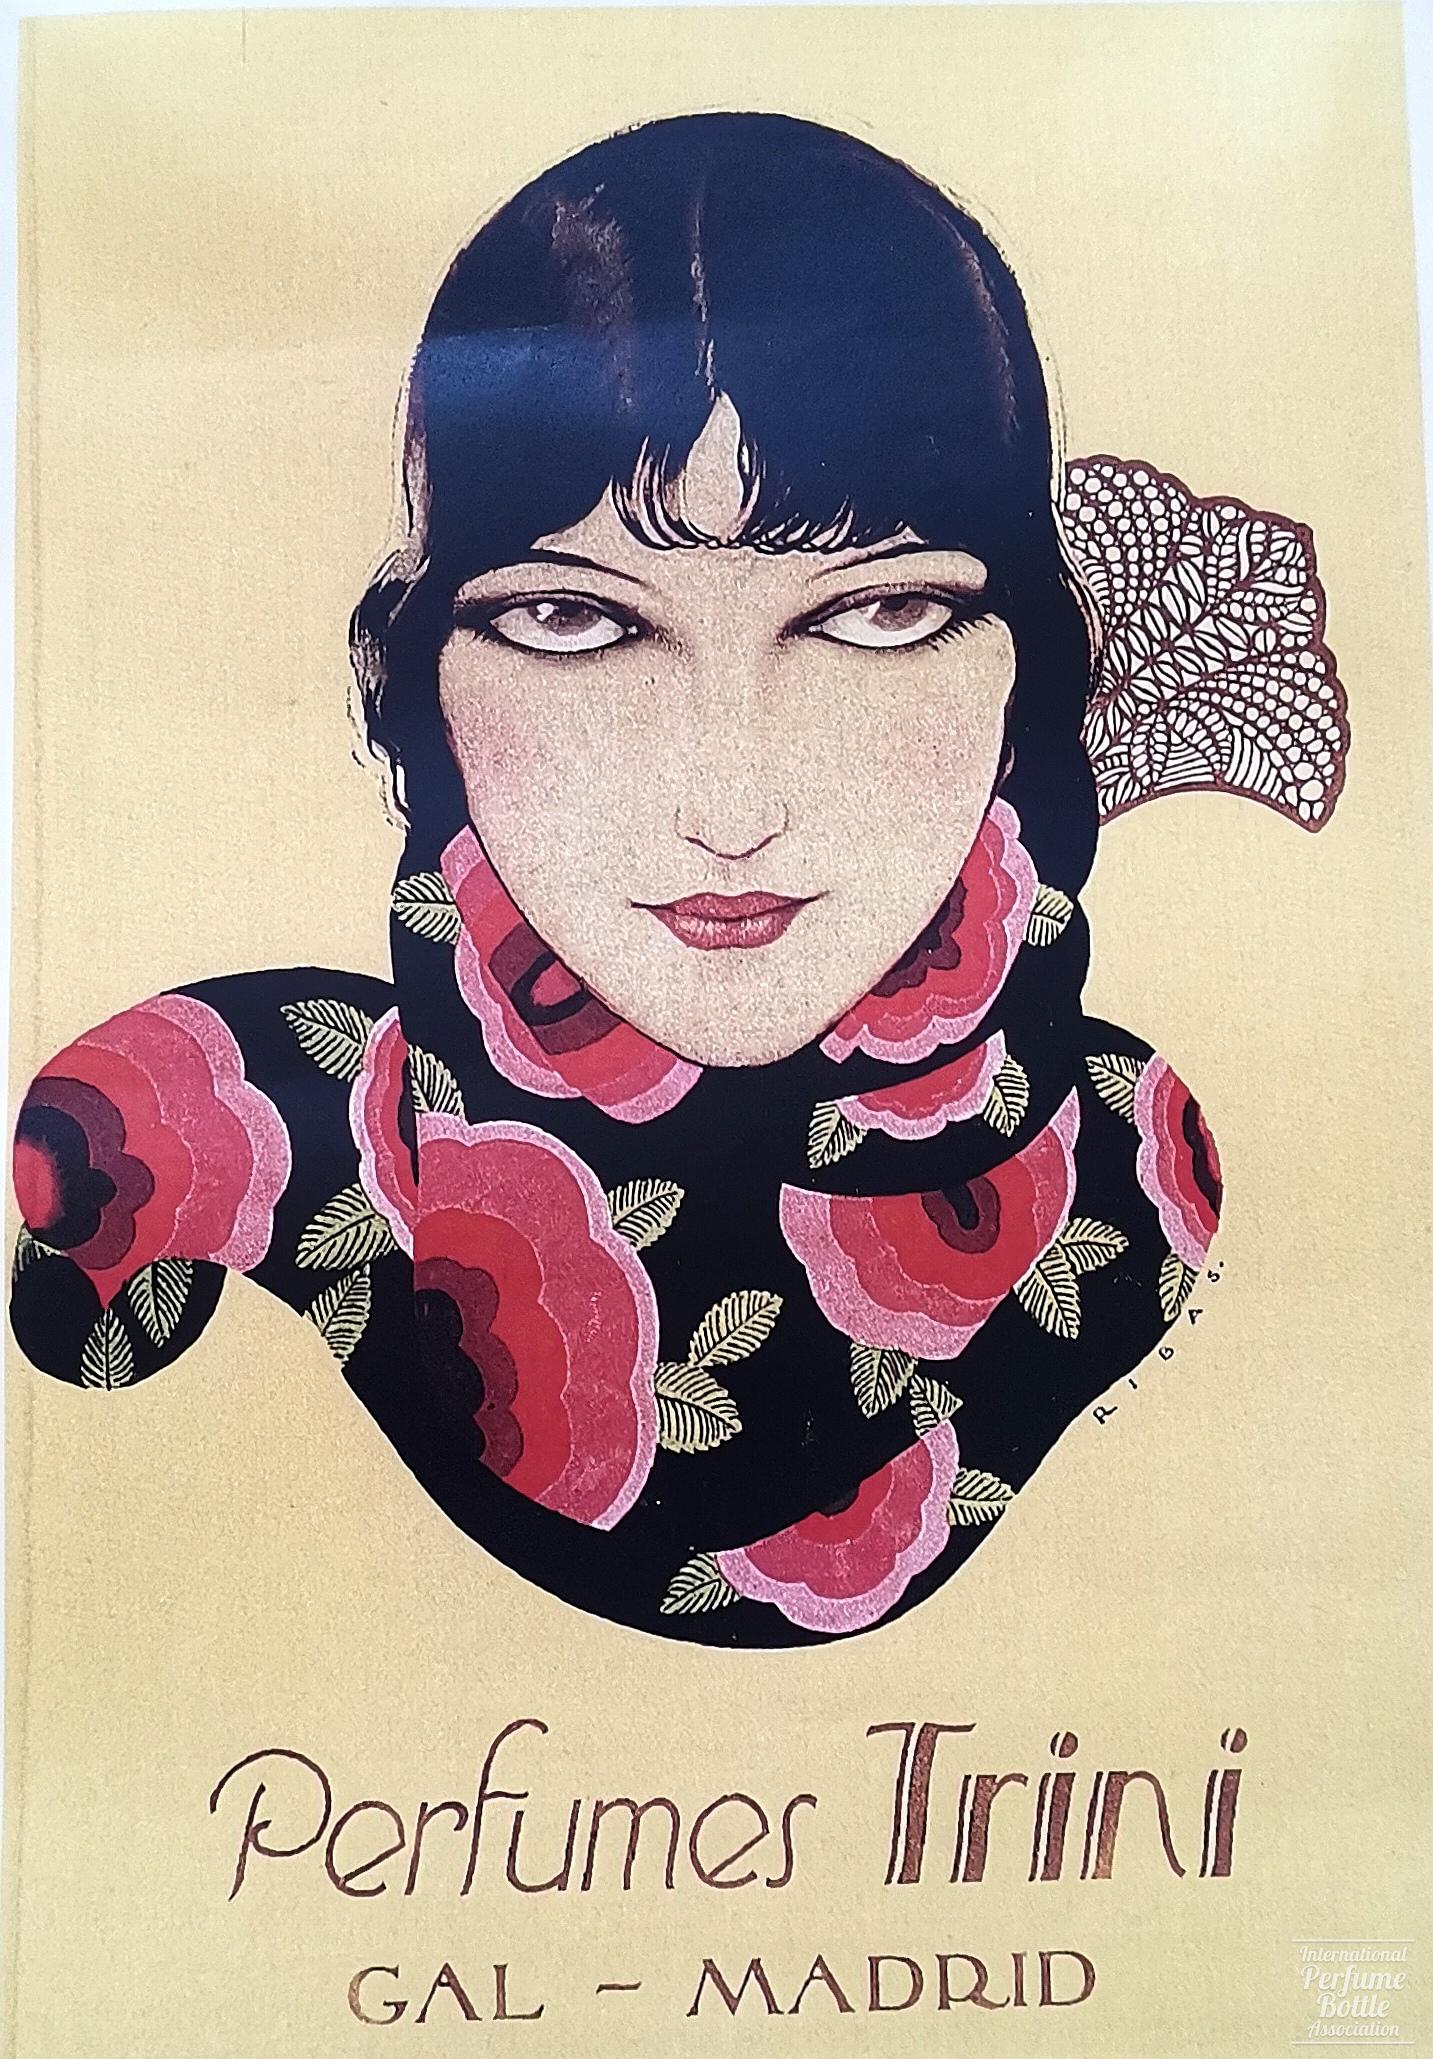 "Perfumes Trini" by Perfumería Gal Advertisement - 1930's